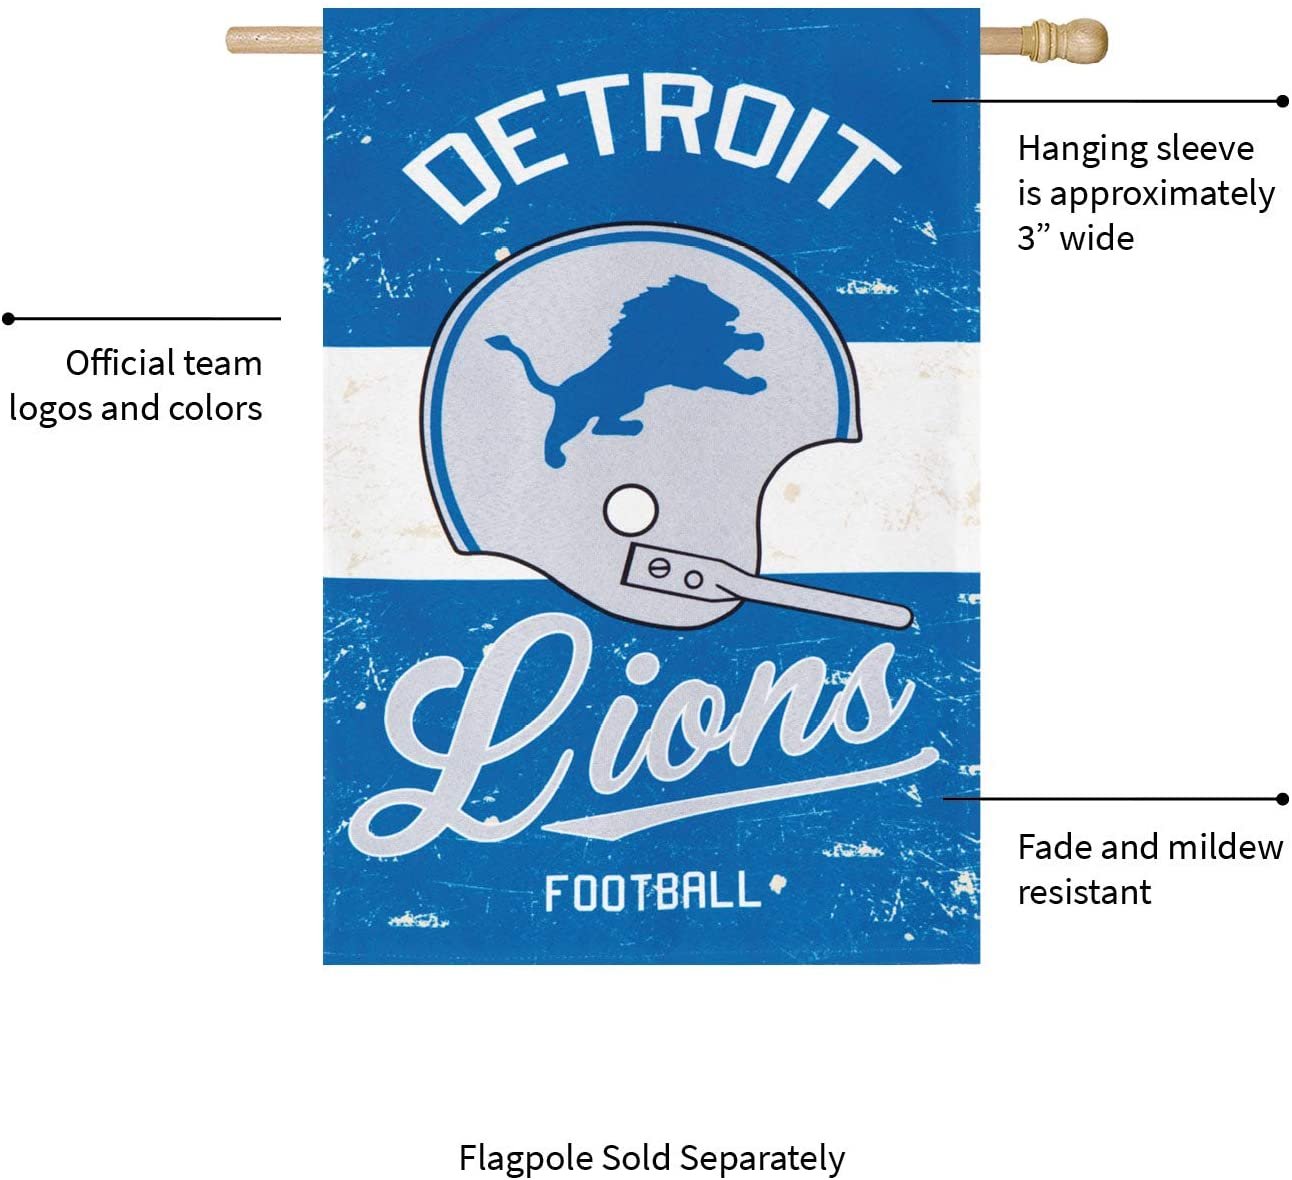 Detroit Lions Premium House Flag Banner, Double Sided, Retro Vintage Style, Linen, 28x44 Inch